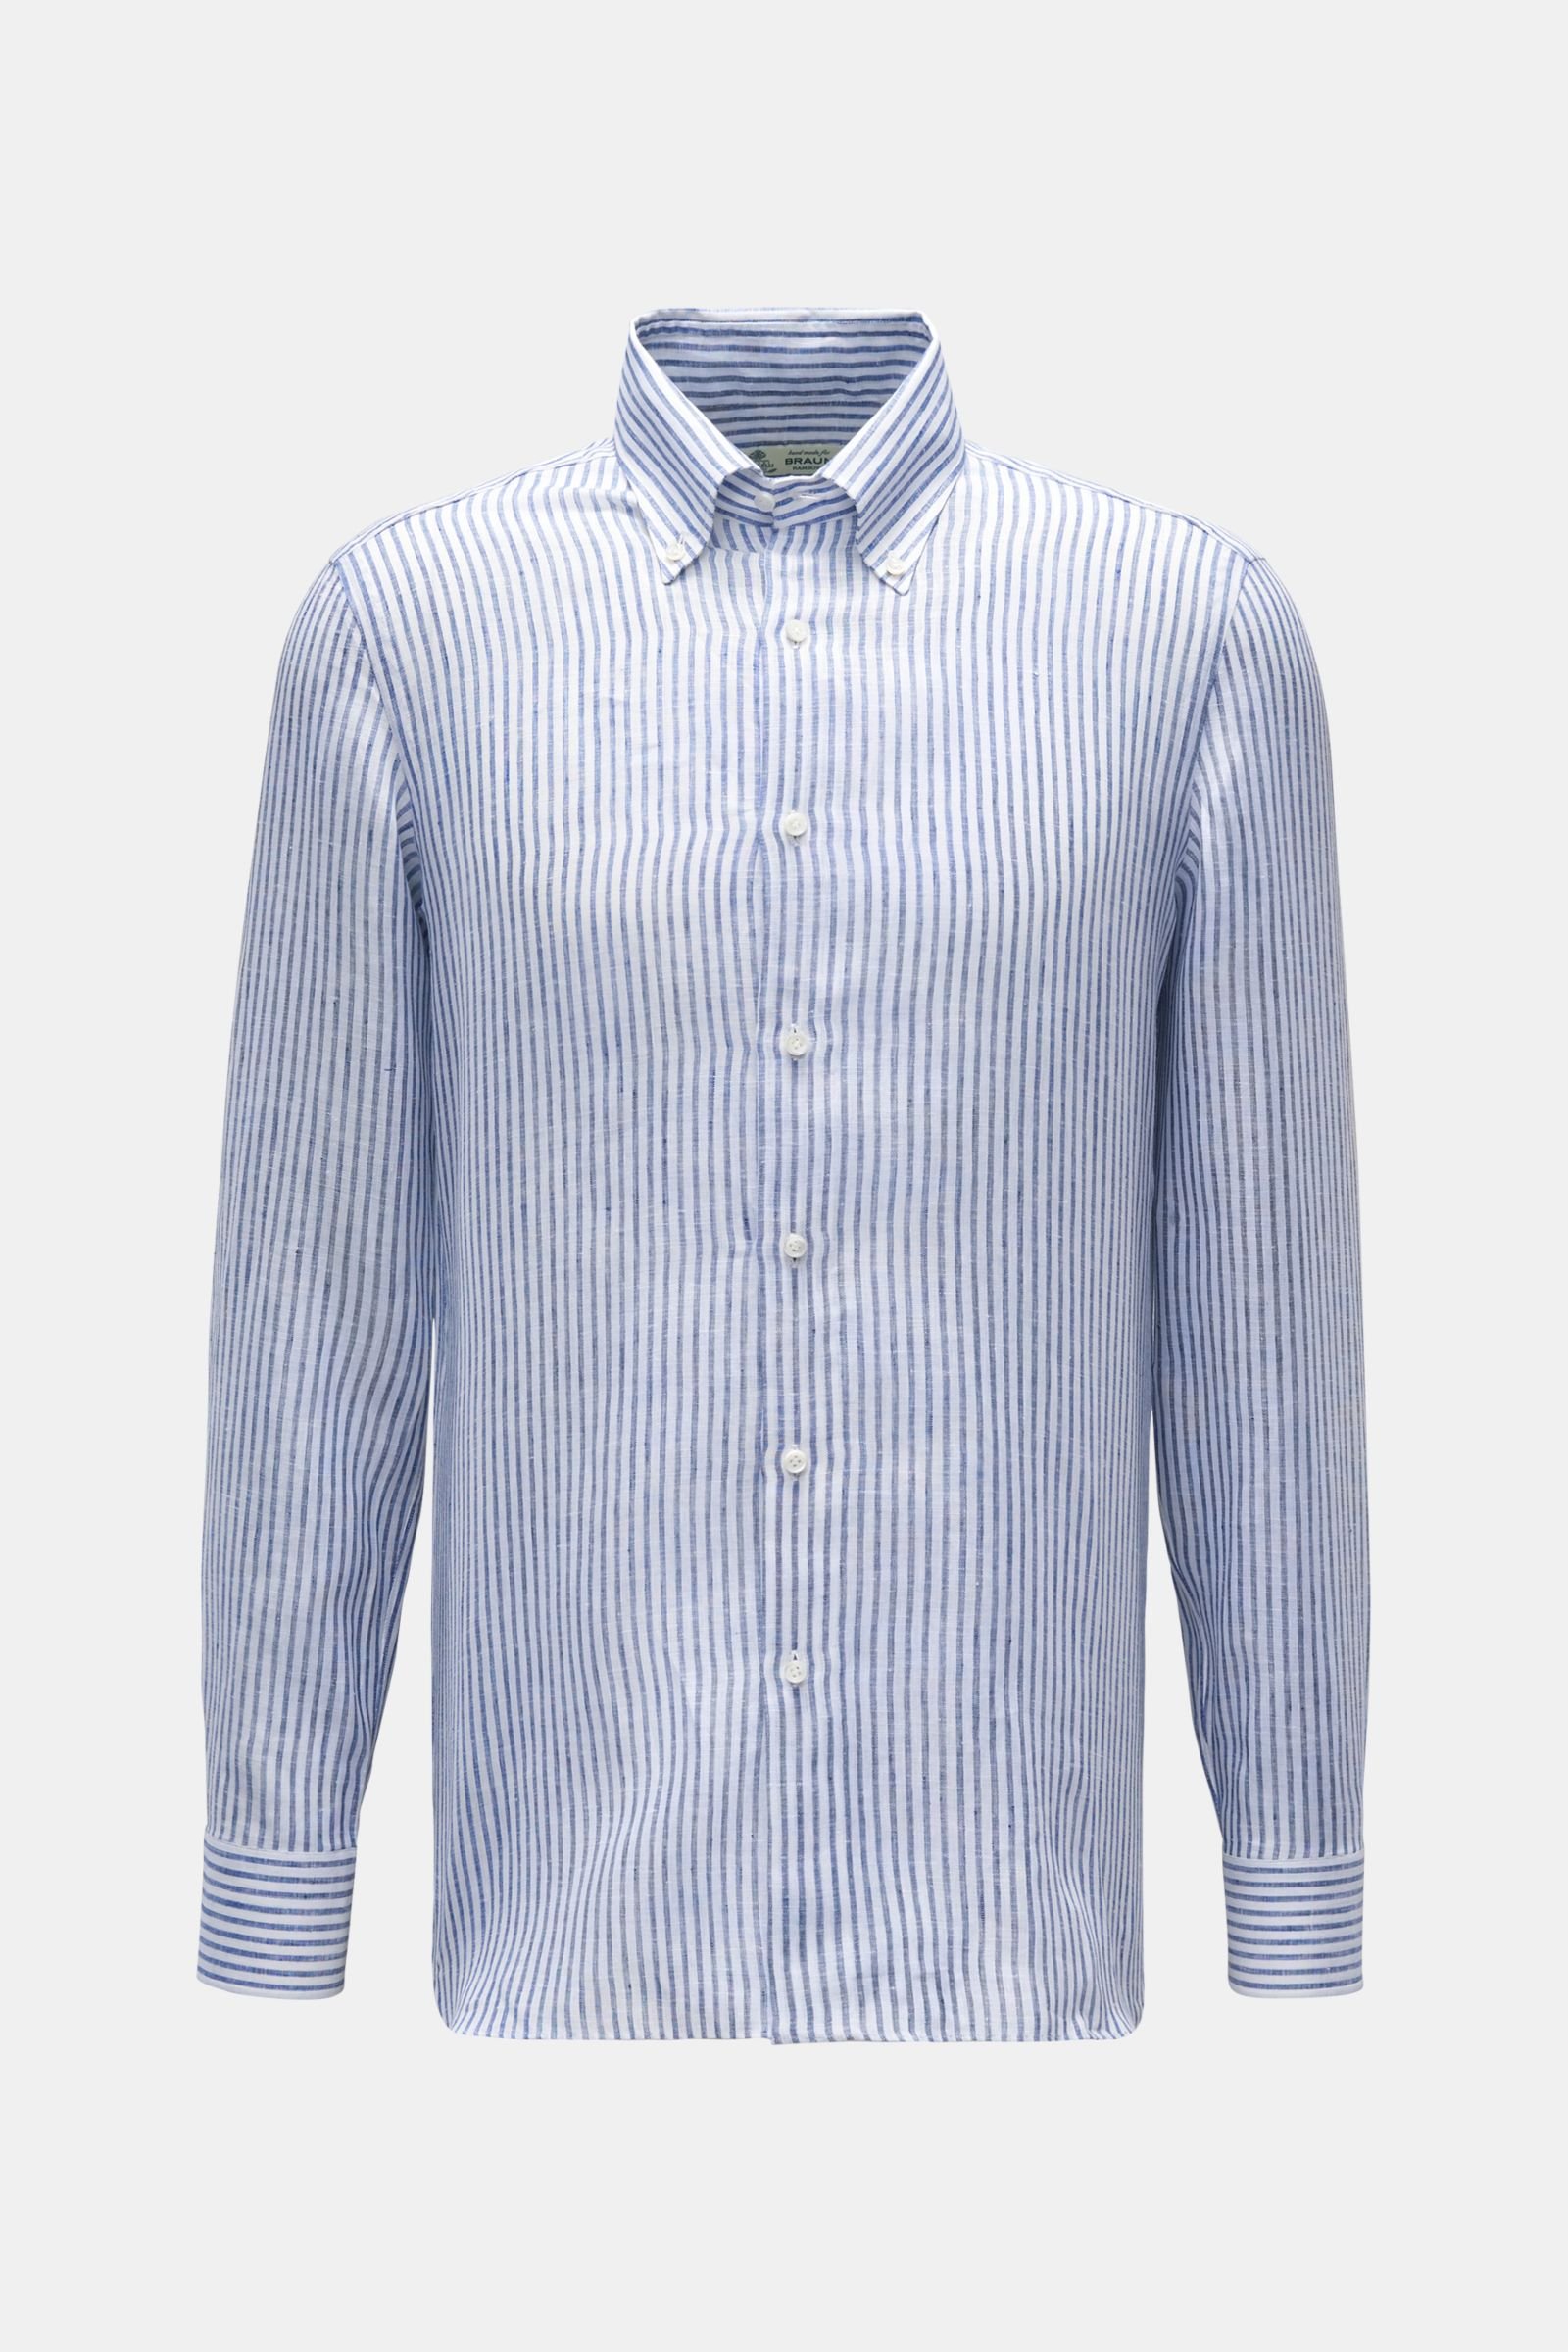 Linen shirt 'Gable' button-down collar dark blue/white striped